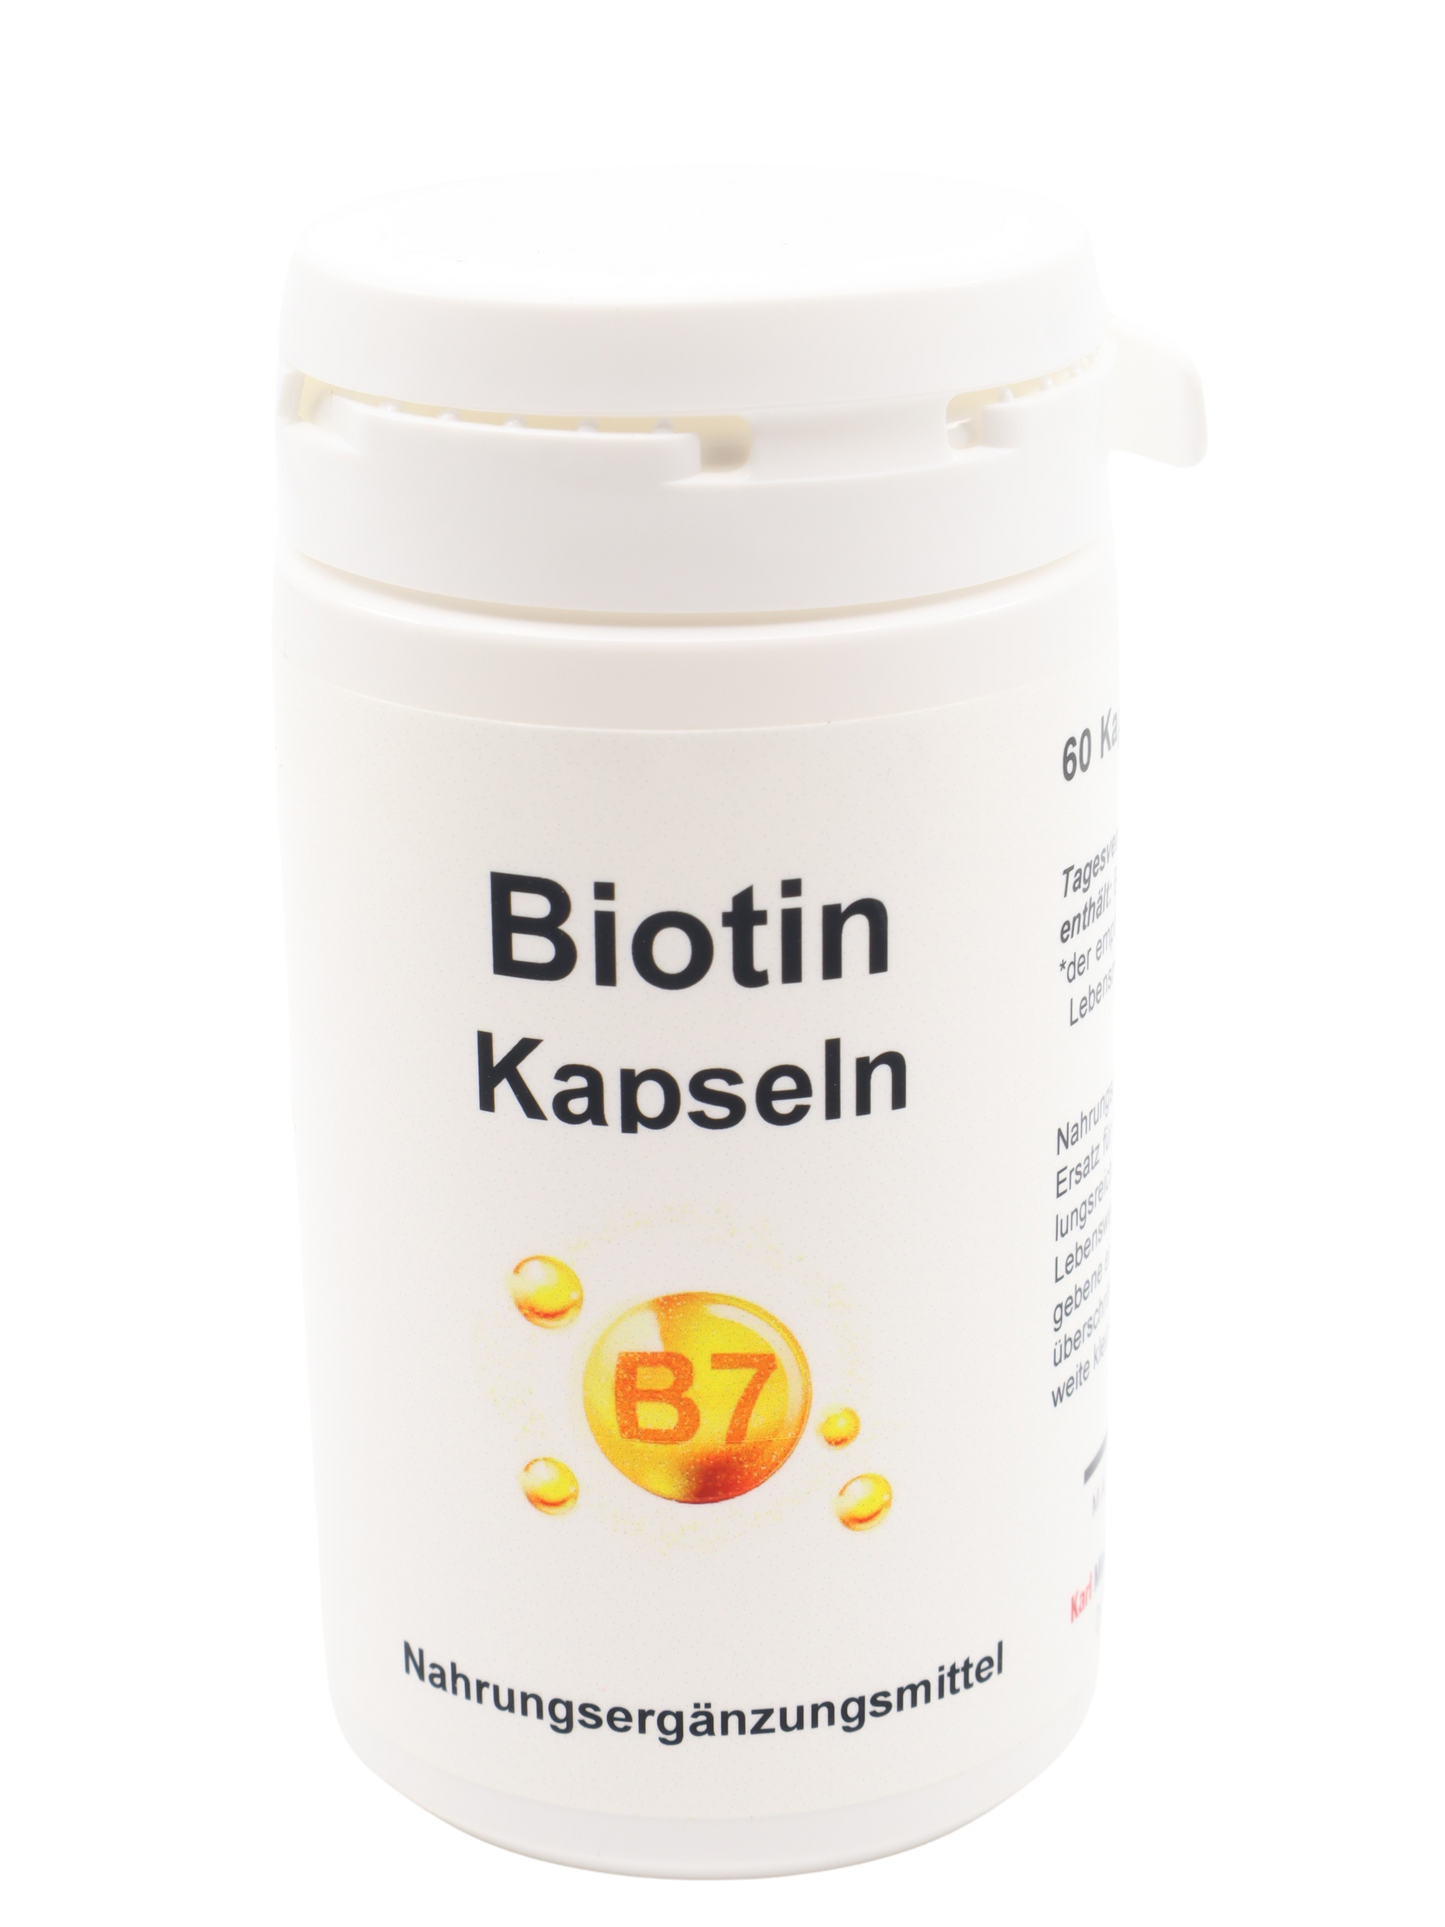 Biotin capsules